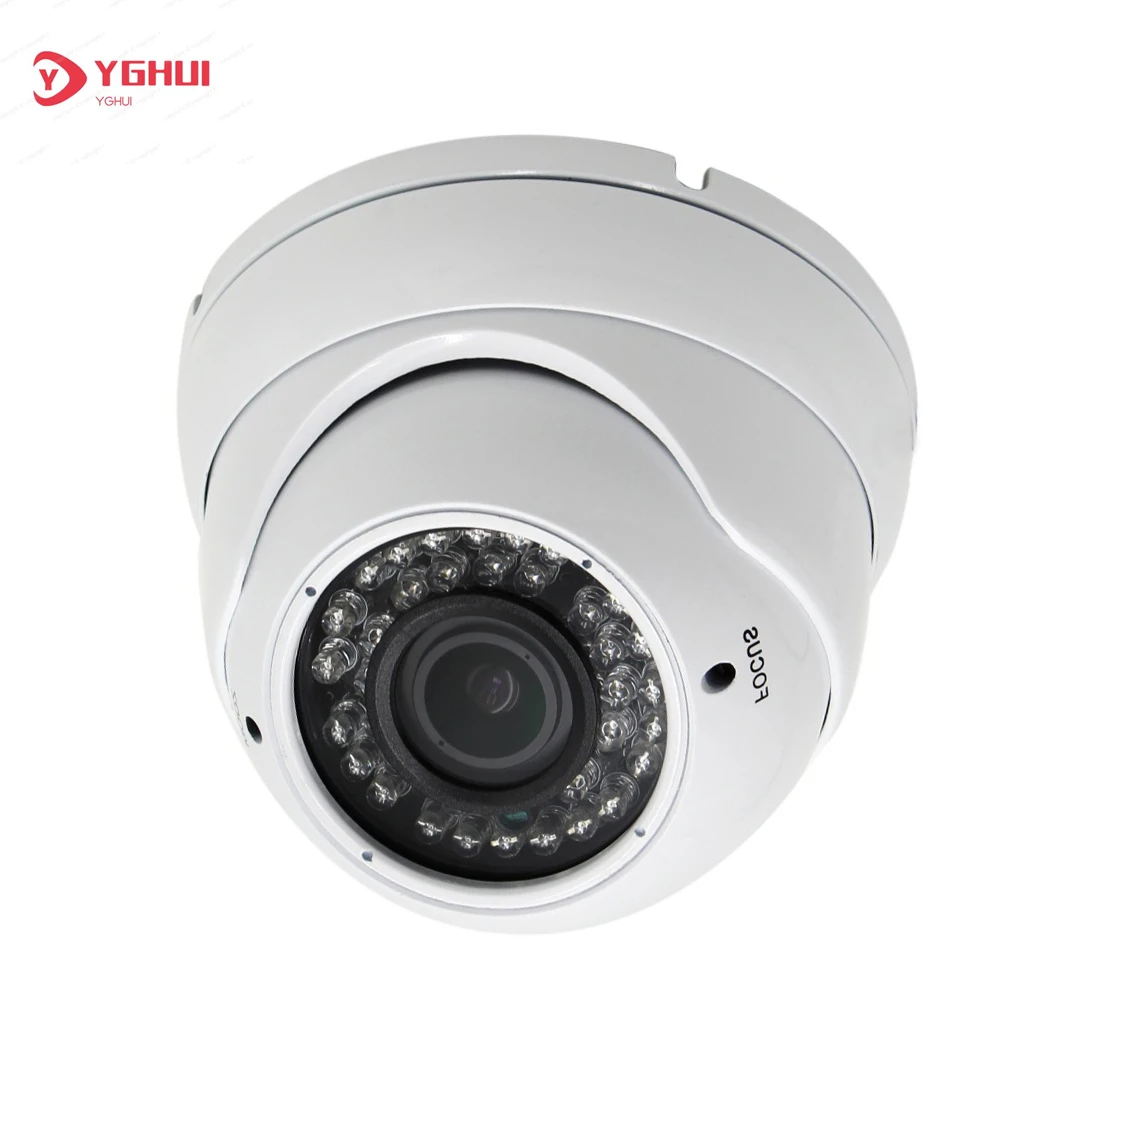 5MP Dome AHD Camera Indoor 2.8-12mm Manual Zoom Lens IR Night Vision OSD Menu Video Surveillance CCTV Cameras